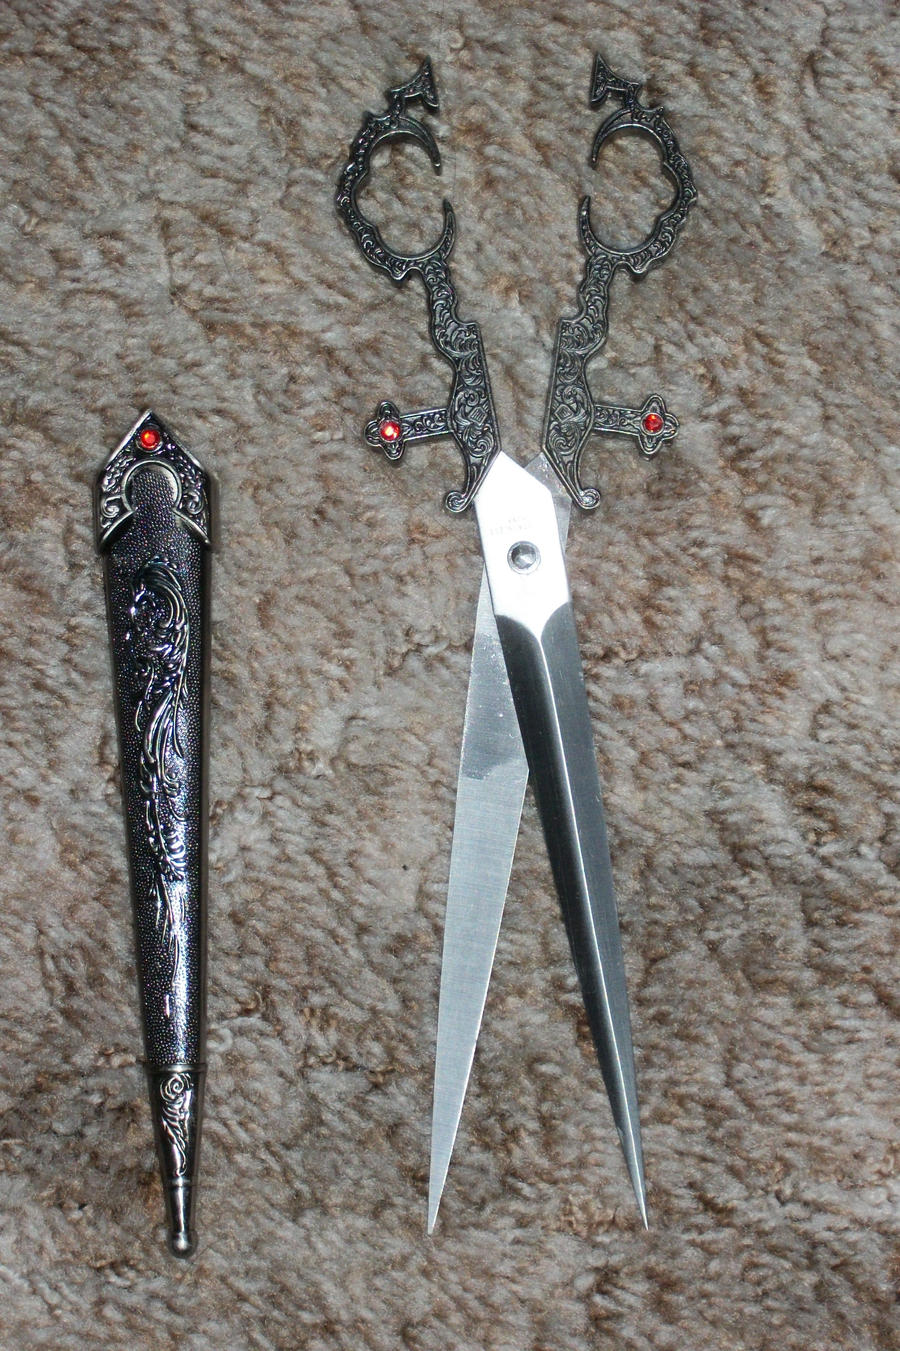 Renaissance scissors by cspirit on DeviantArt